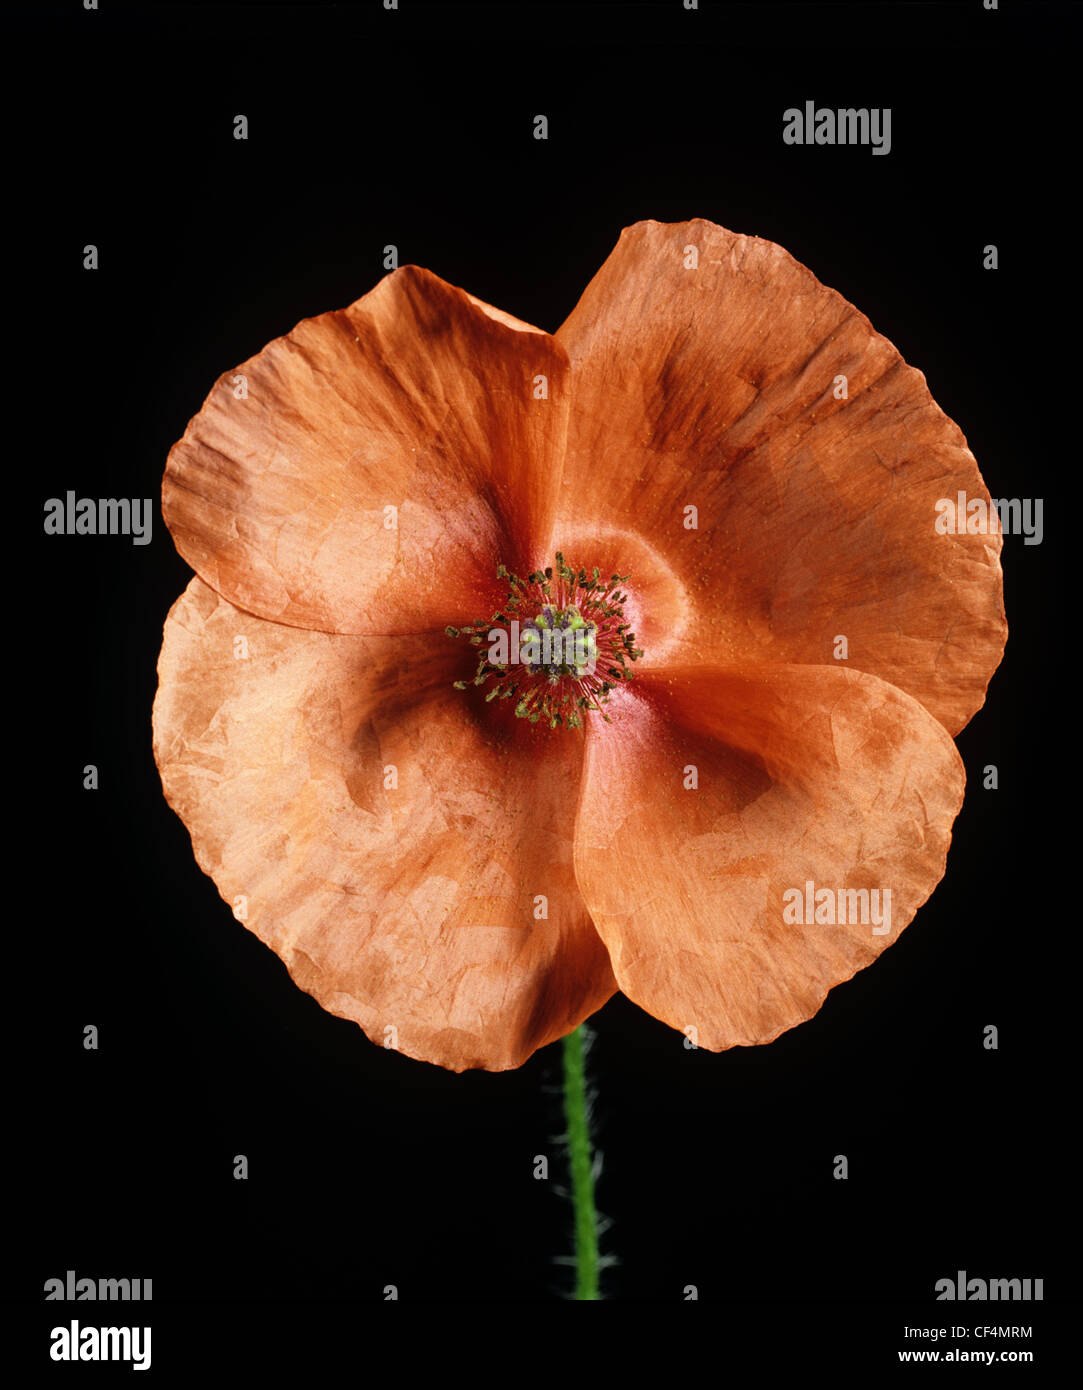 Long-headed poppy (Papaver dubium) poppy flower against a black background Stock Photo